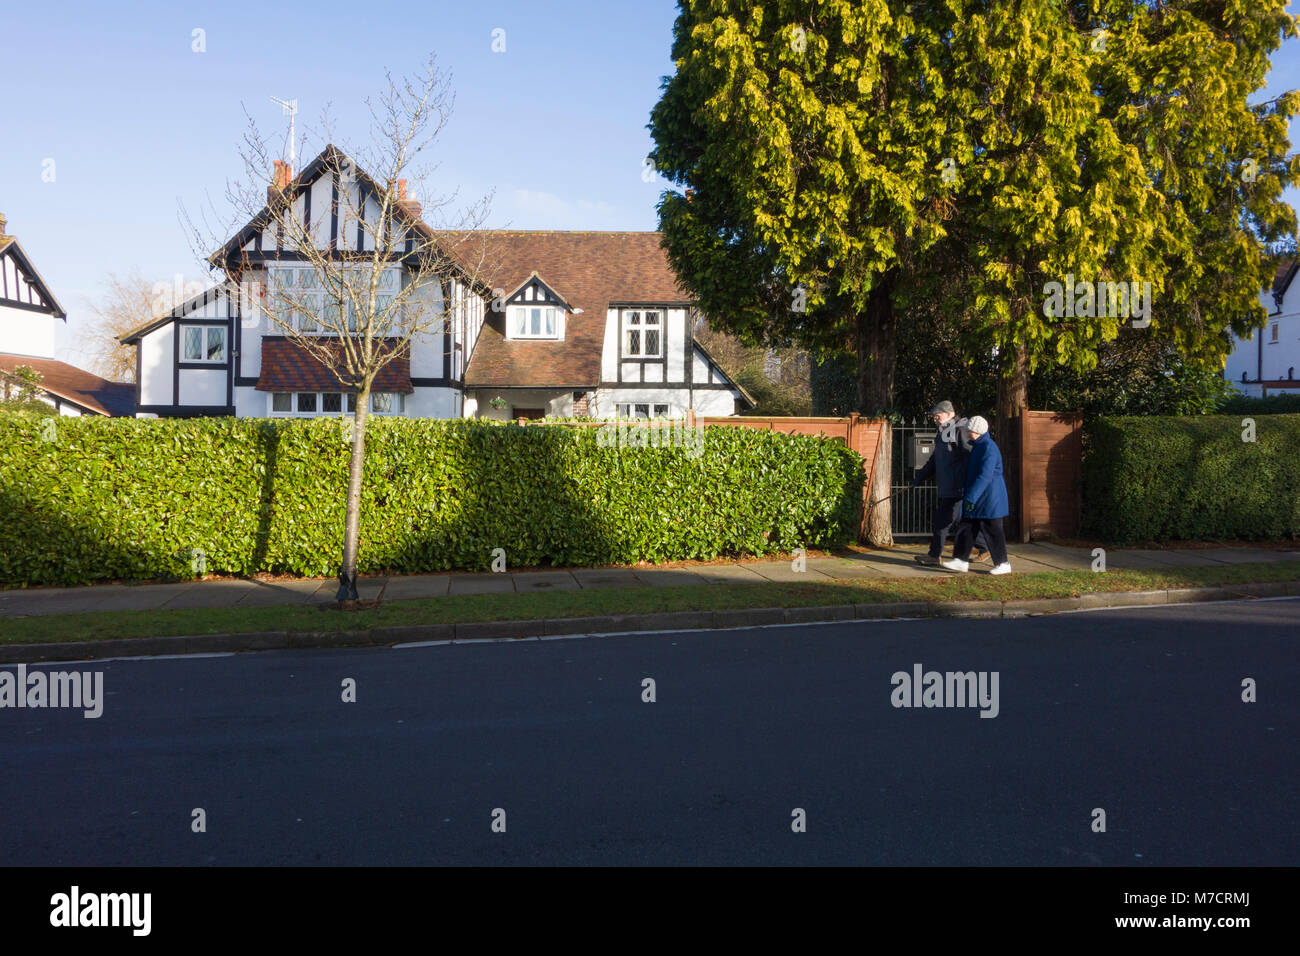 Typical detached English Neo-Tudor suburban house behind hedges in Bristol, UK. Stock Photo